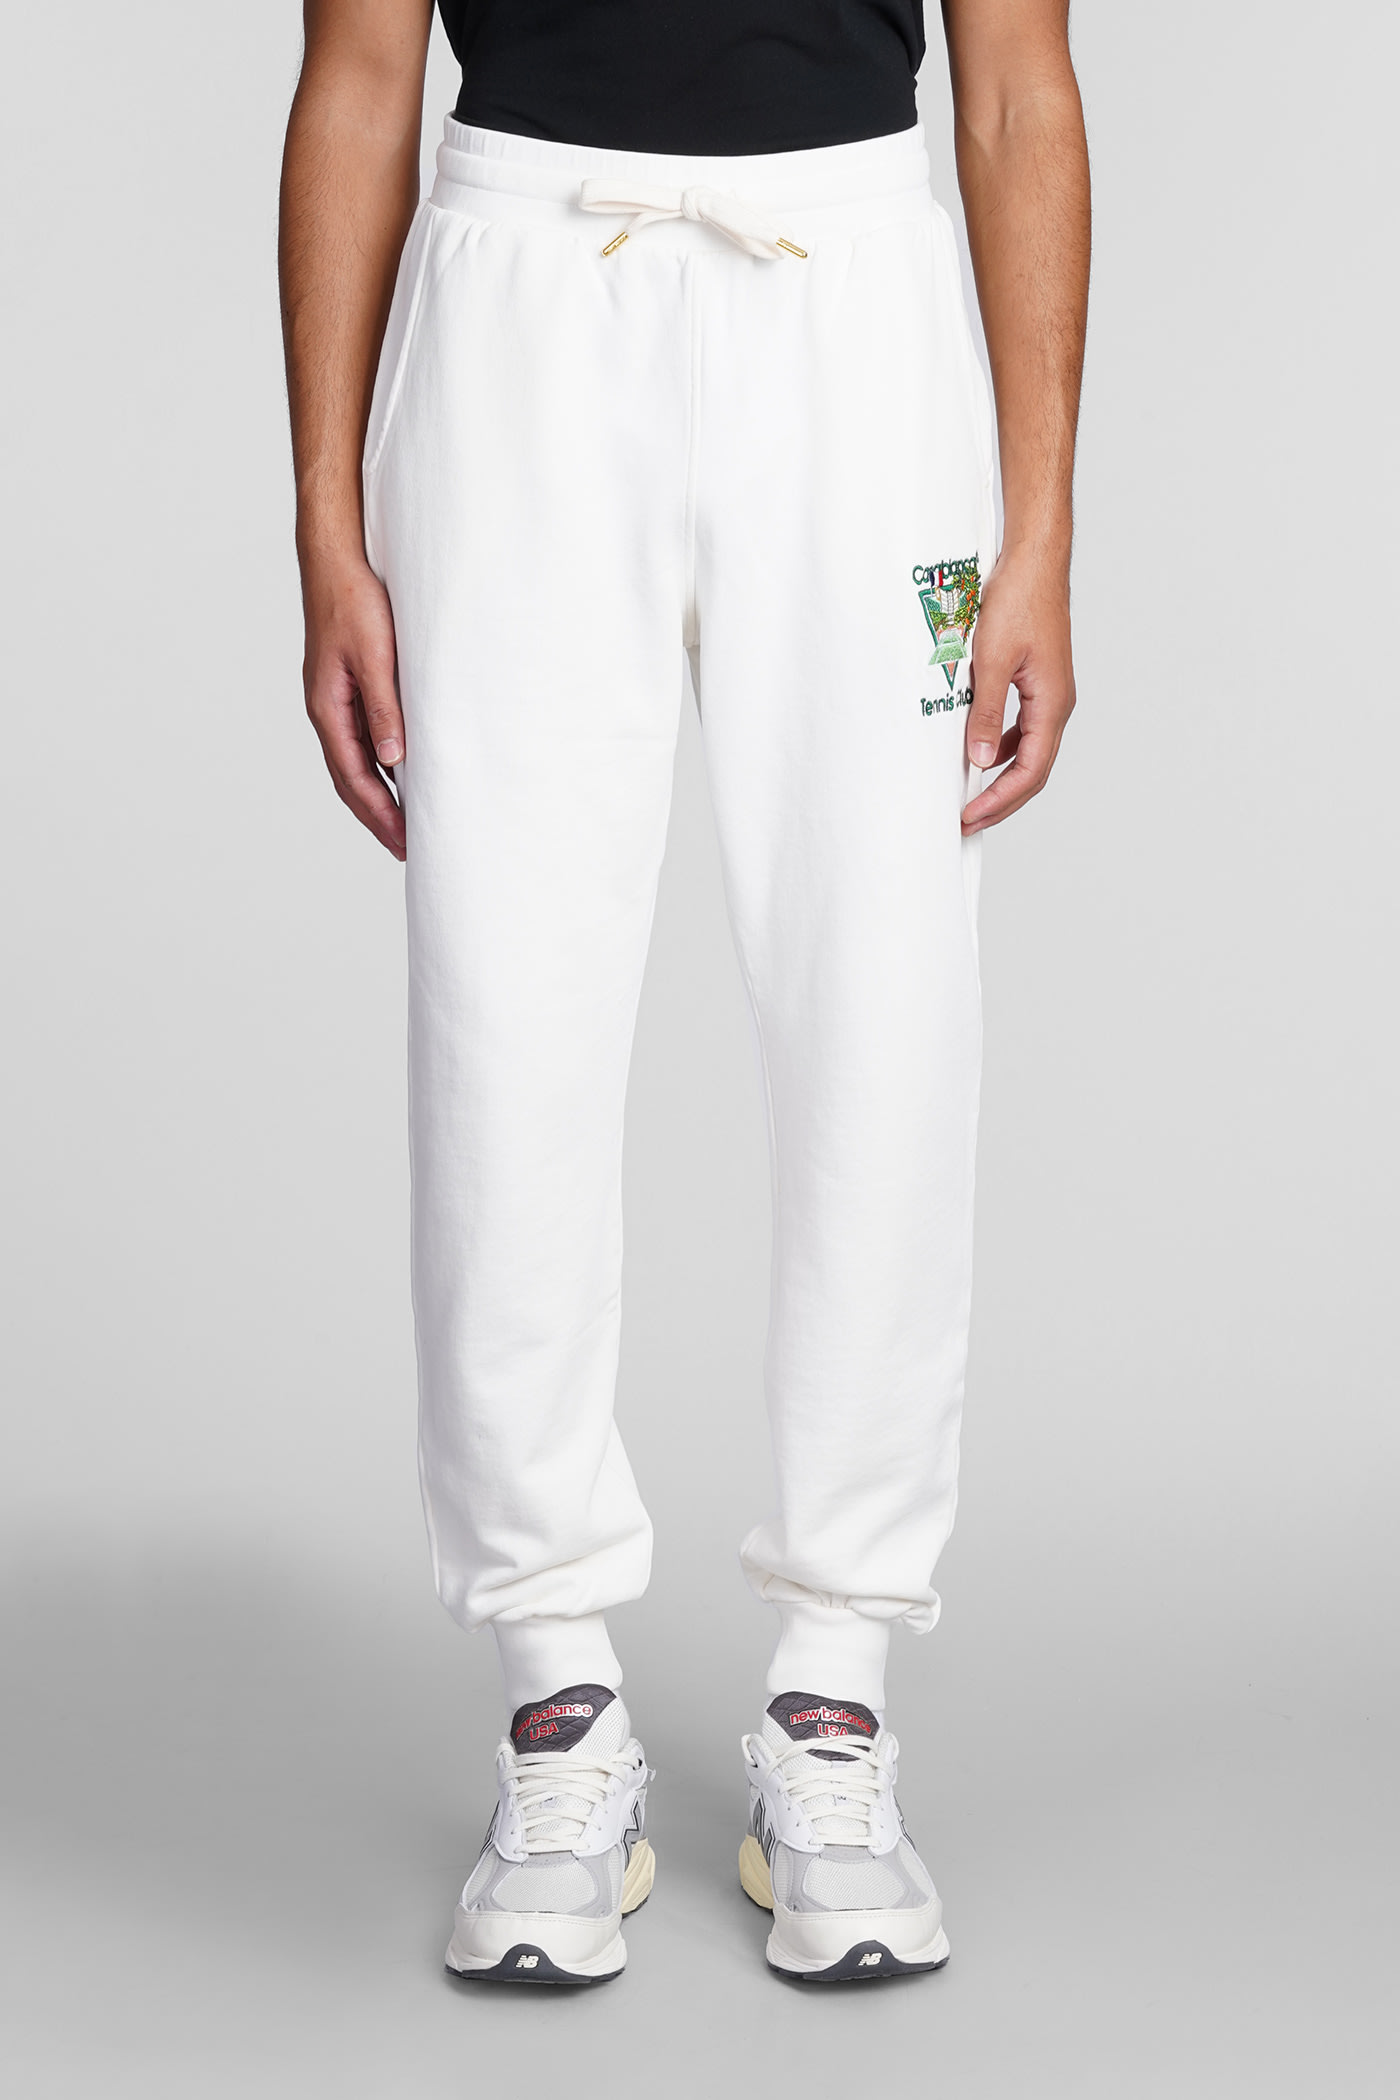 Casablanca Pants In White Cotton